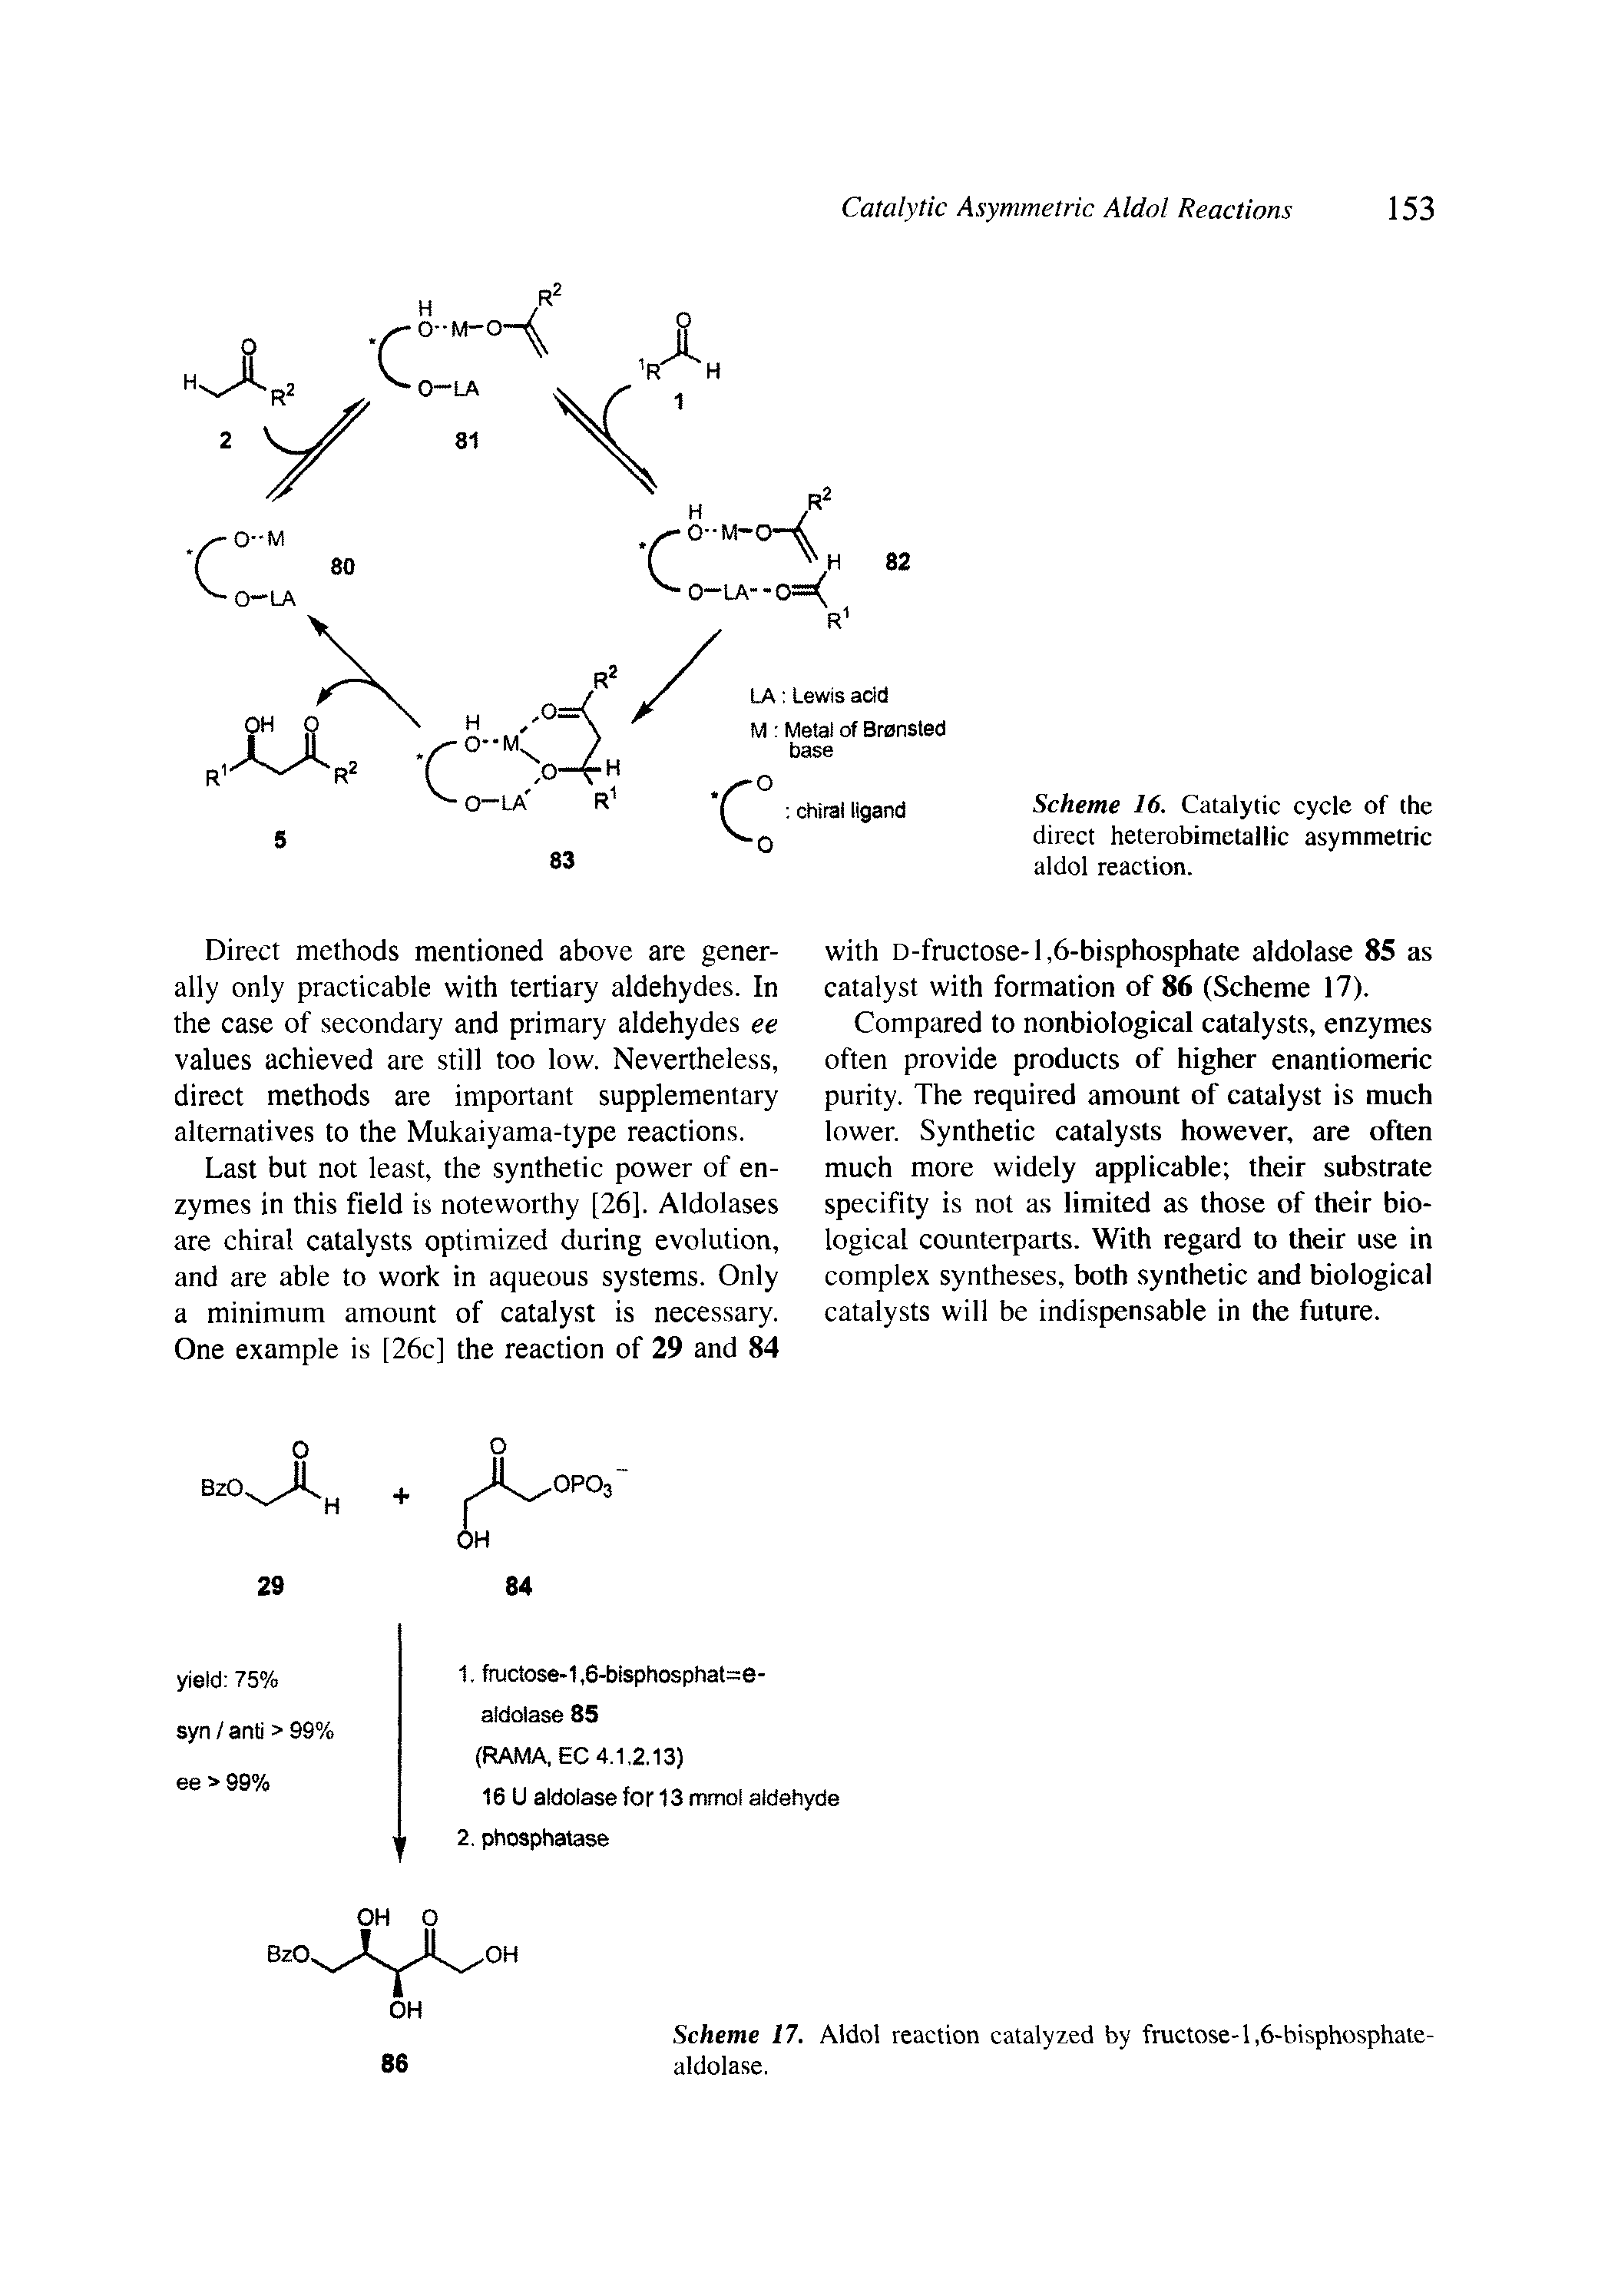 Scheme 16. Catalytic cycle of the direct heterobimetallic asymmetric aldol reaction.